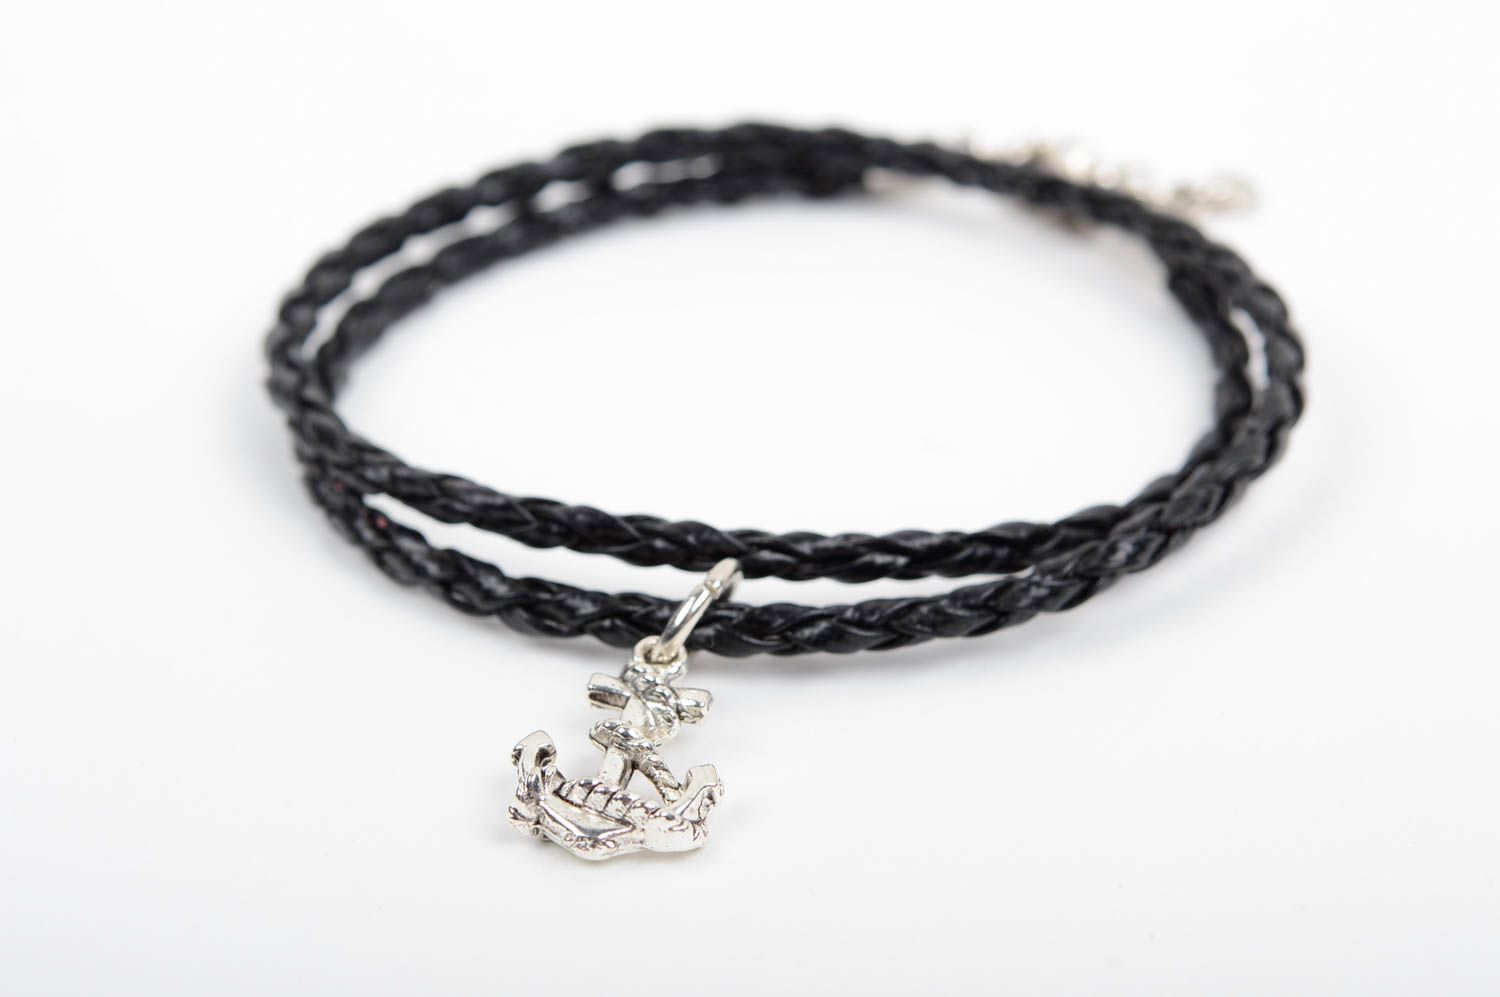 Simple woven black bracelet handmade wrist accessory unusual jewelry with charm photo 2